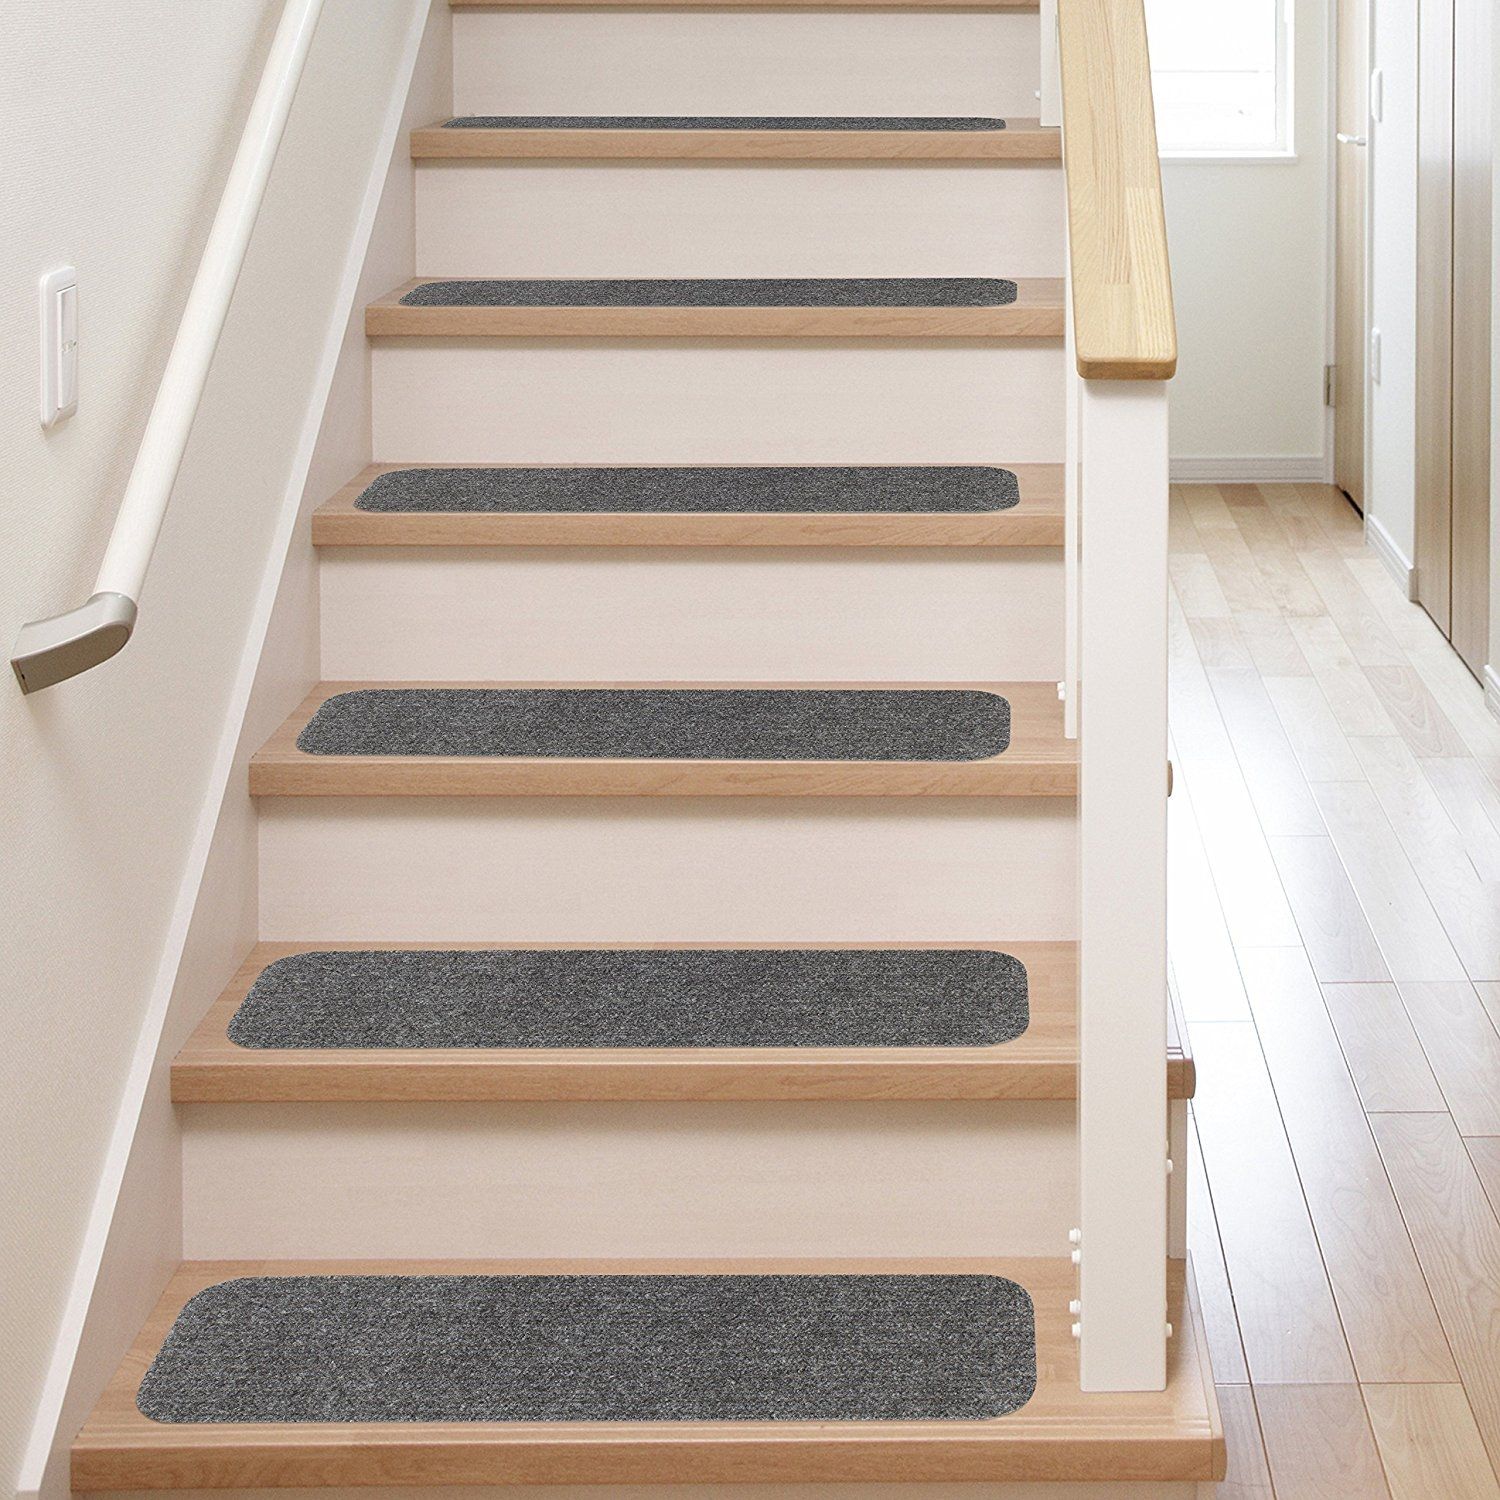 13 Stair Treads Non Slip Carpet Pads Easy Tape Installation Regarding Non Skid Stair Treads Carpet (View 3 of 20)